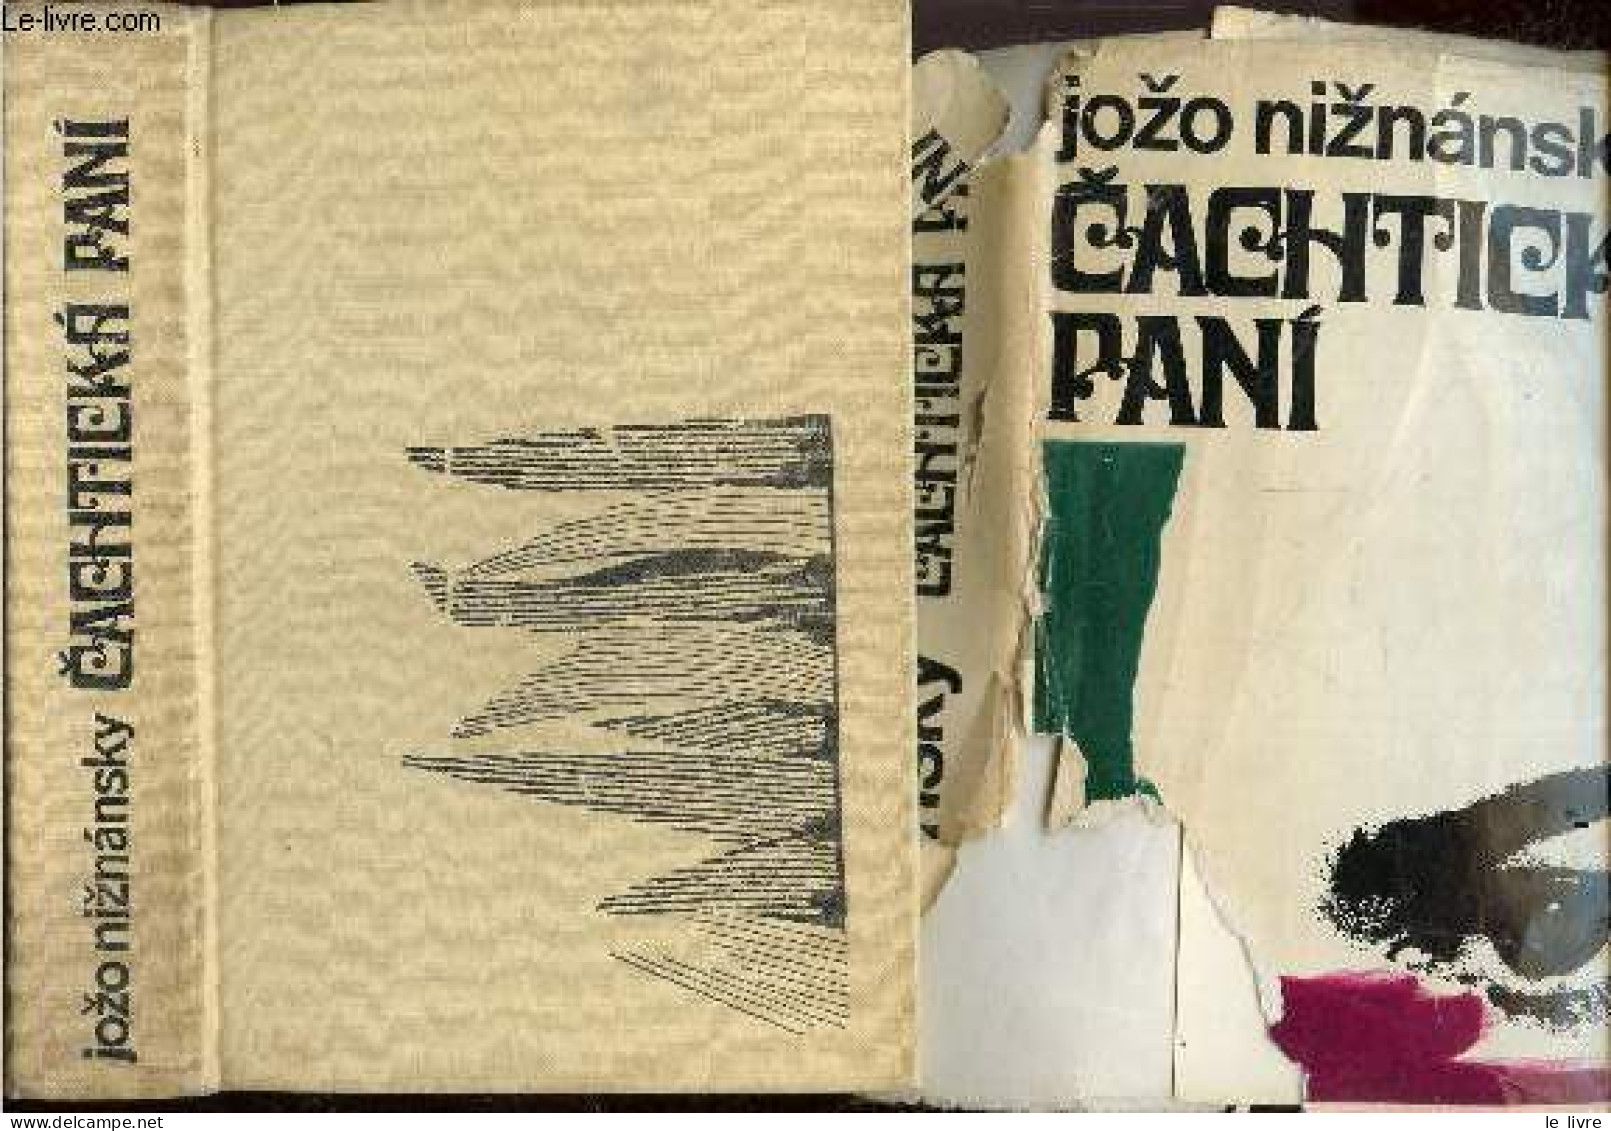 Cachticka Pani - Jozo Niznansky - Karel Klebes - 1970 - Cultura